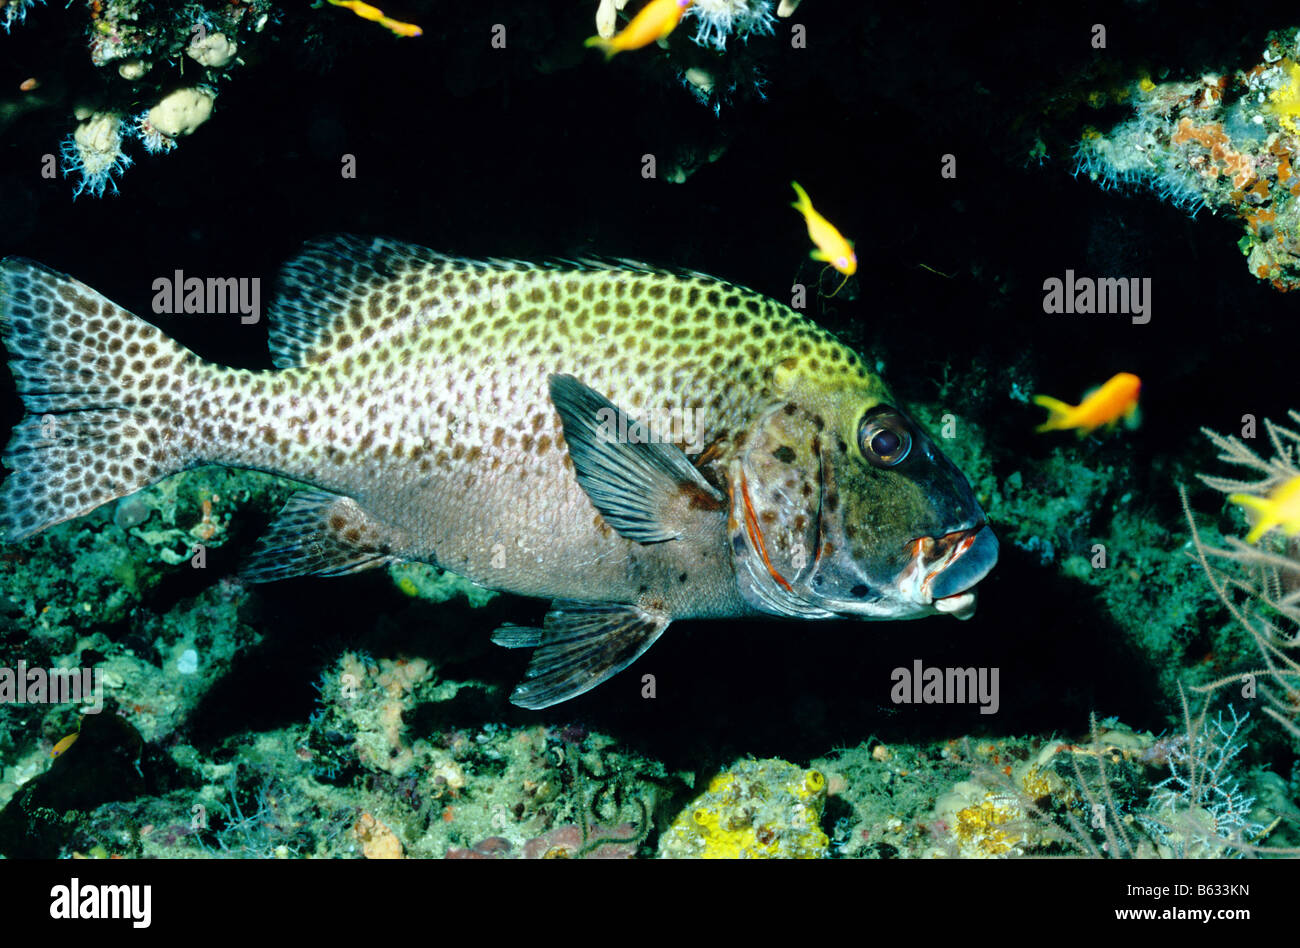 Sweetlips. Order: Perciformes. Family: Haemulidae. Plectorhinchus Pictus. Underwater marine life of the Maldives. Stock Photo